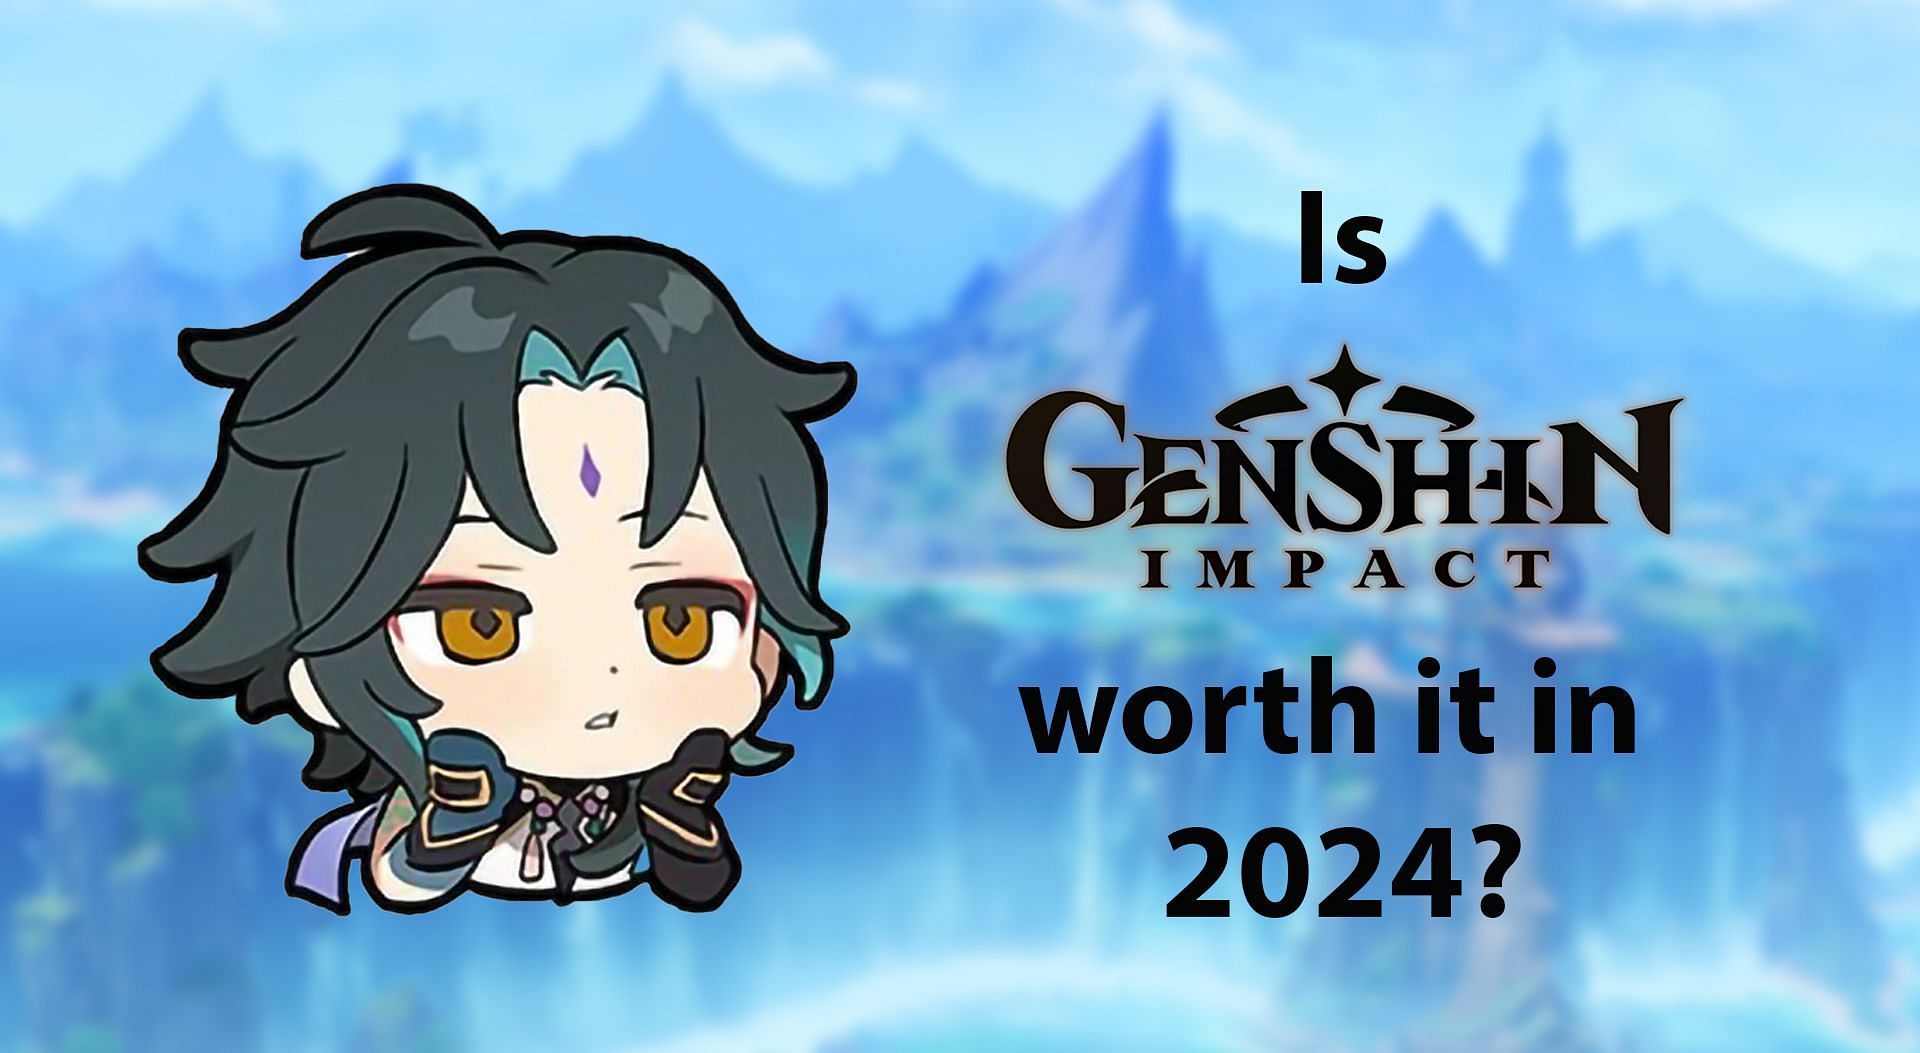 Genshin Impact worth it in 2024?